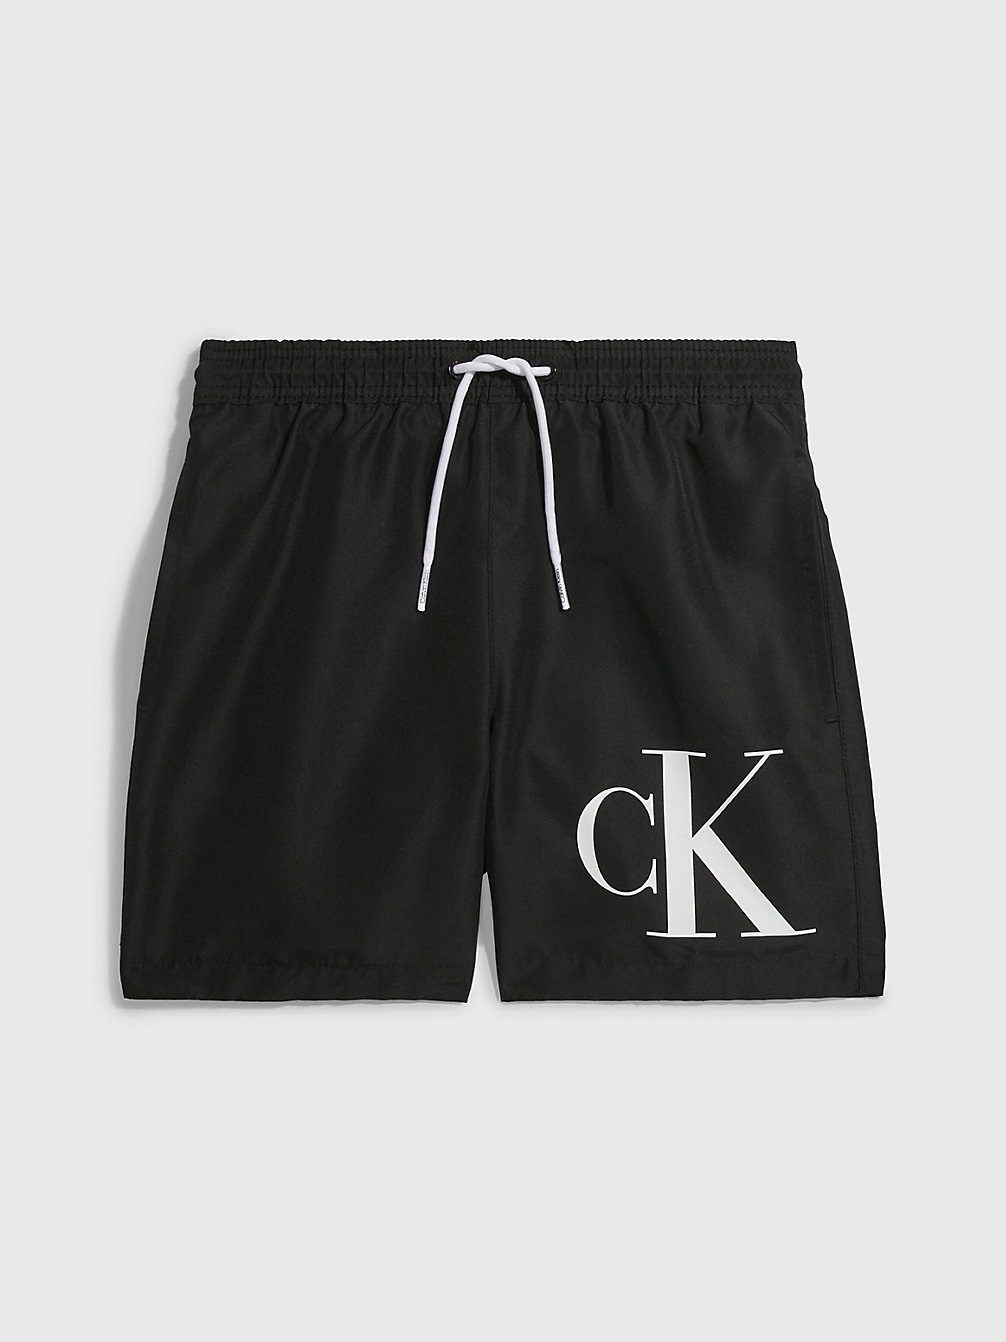 PVH BLACK > Jongenszwemshorts - CK Monogram > undefined boys - Calvin Klein